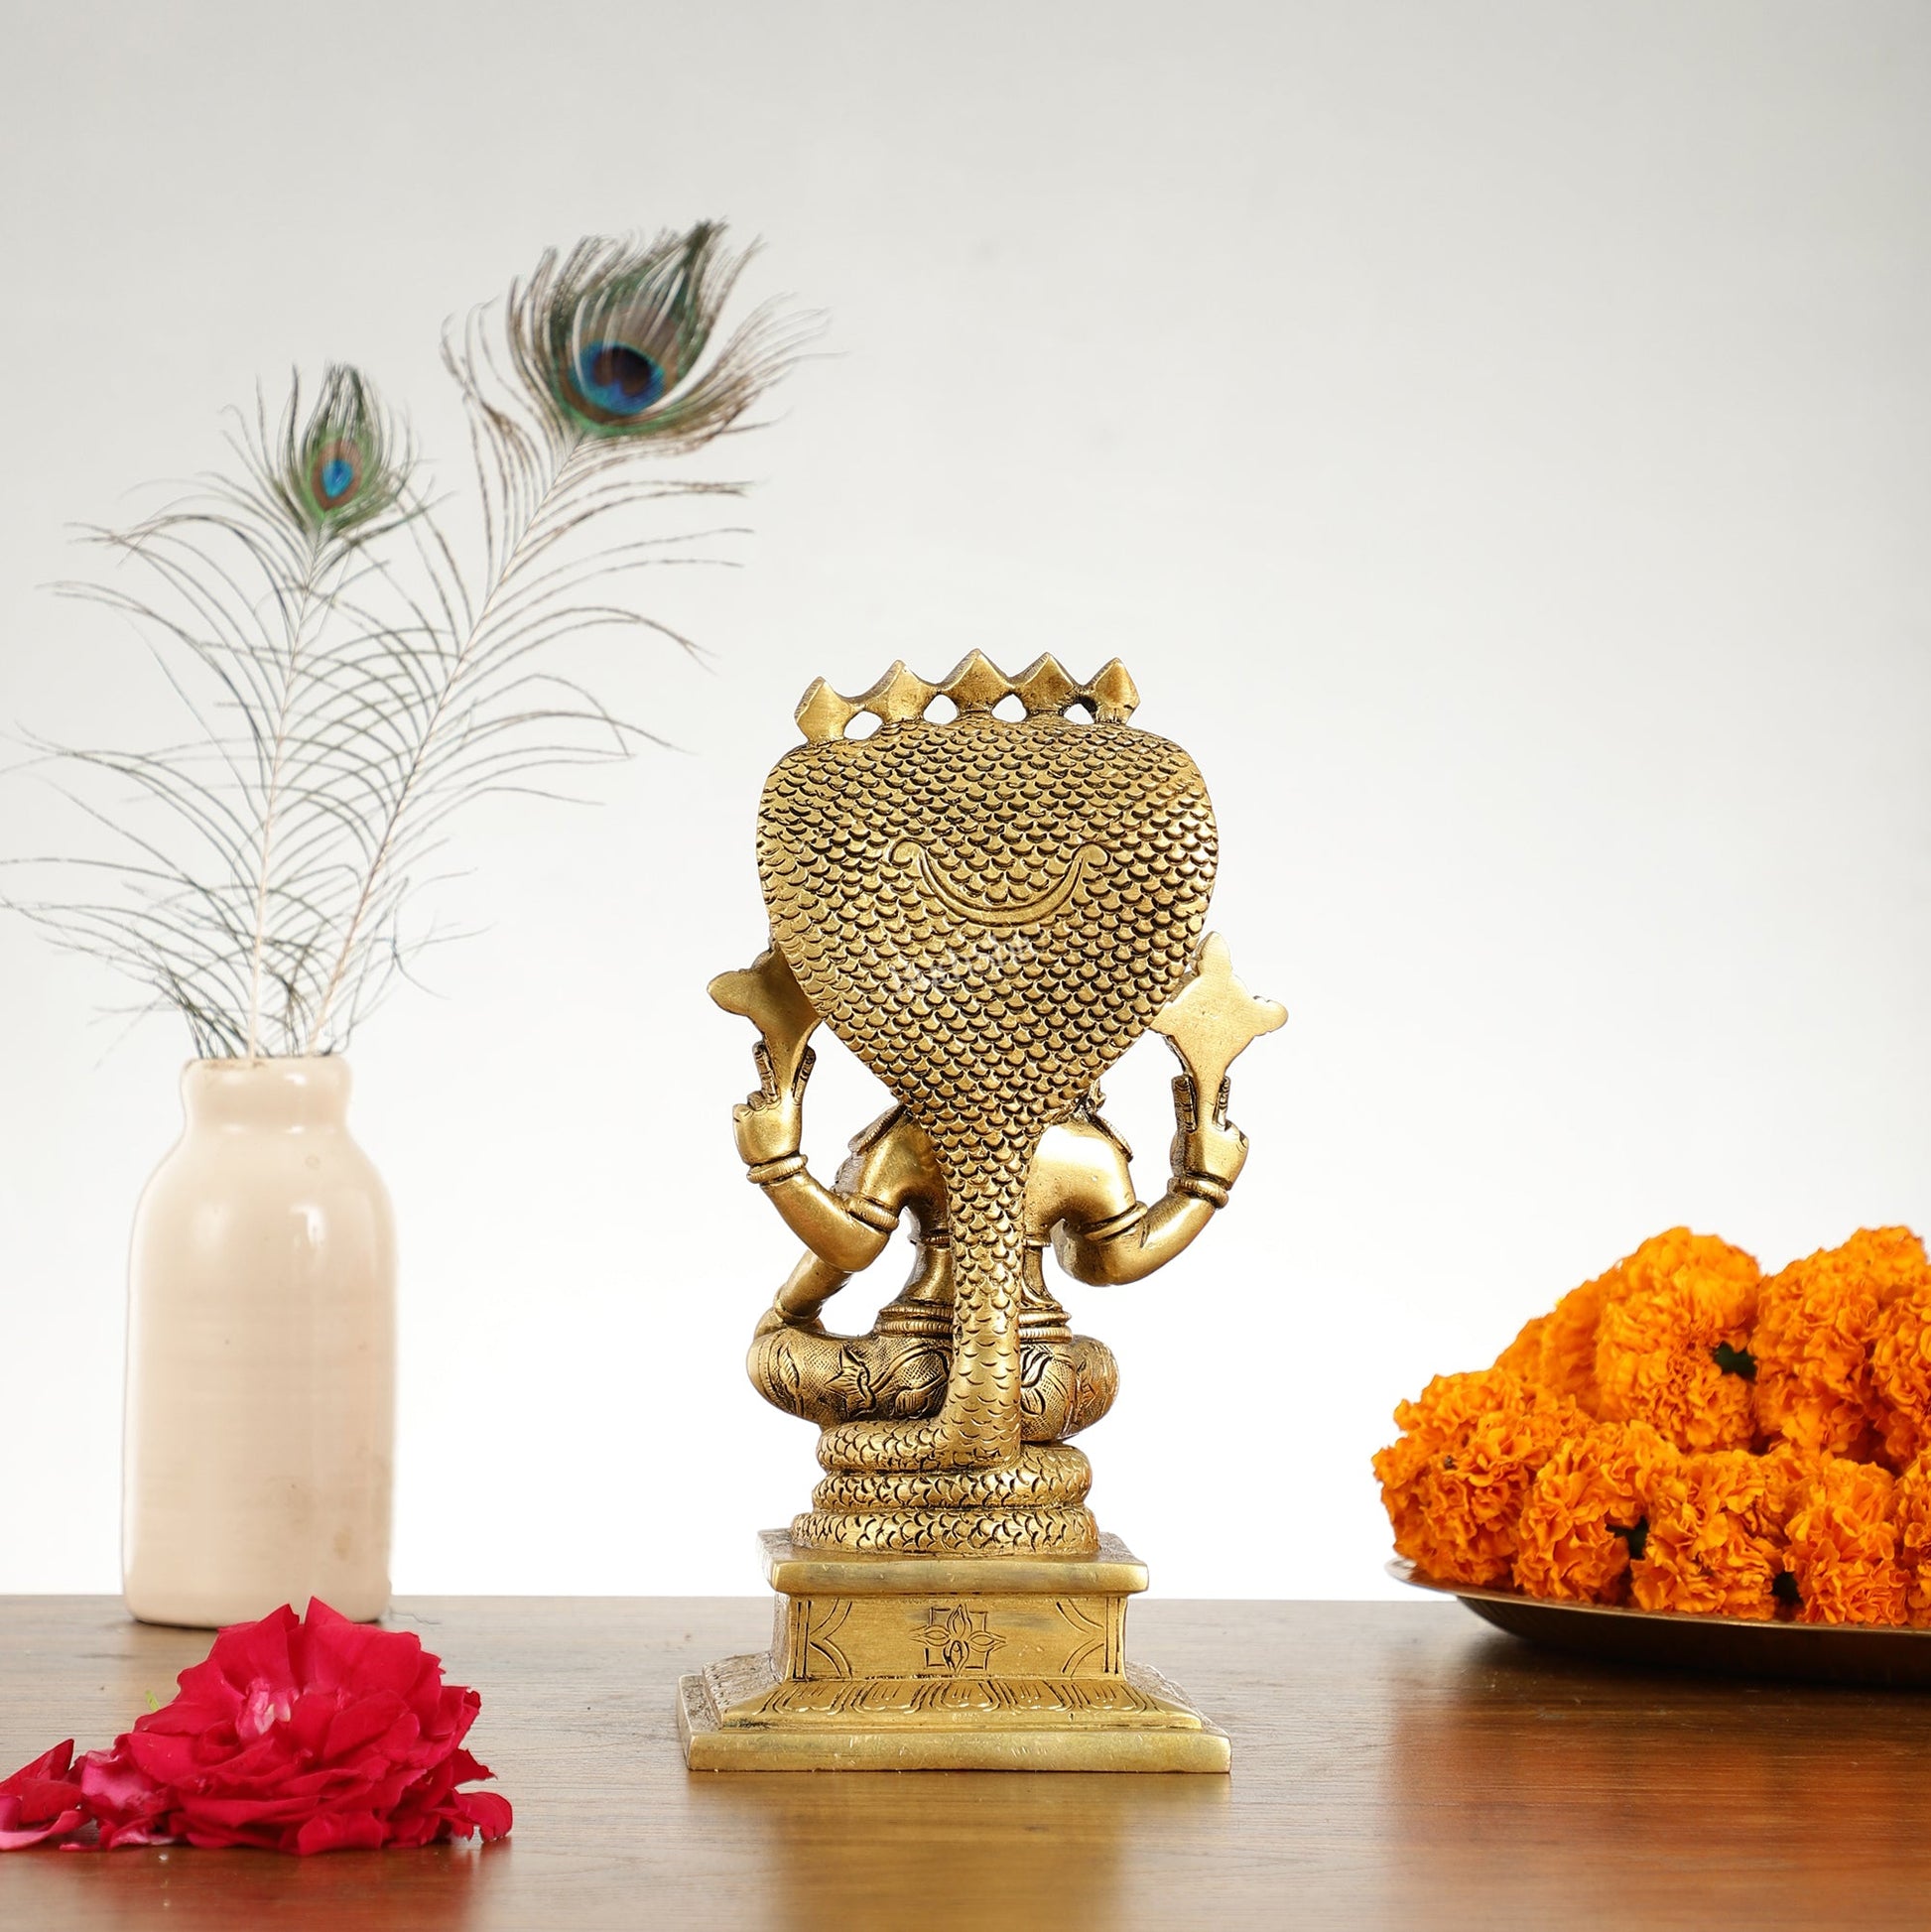 Brass Sitting Lord Vishnu with Sheshanaag Idol - 9.25 Inch - Budhshiv.com